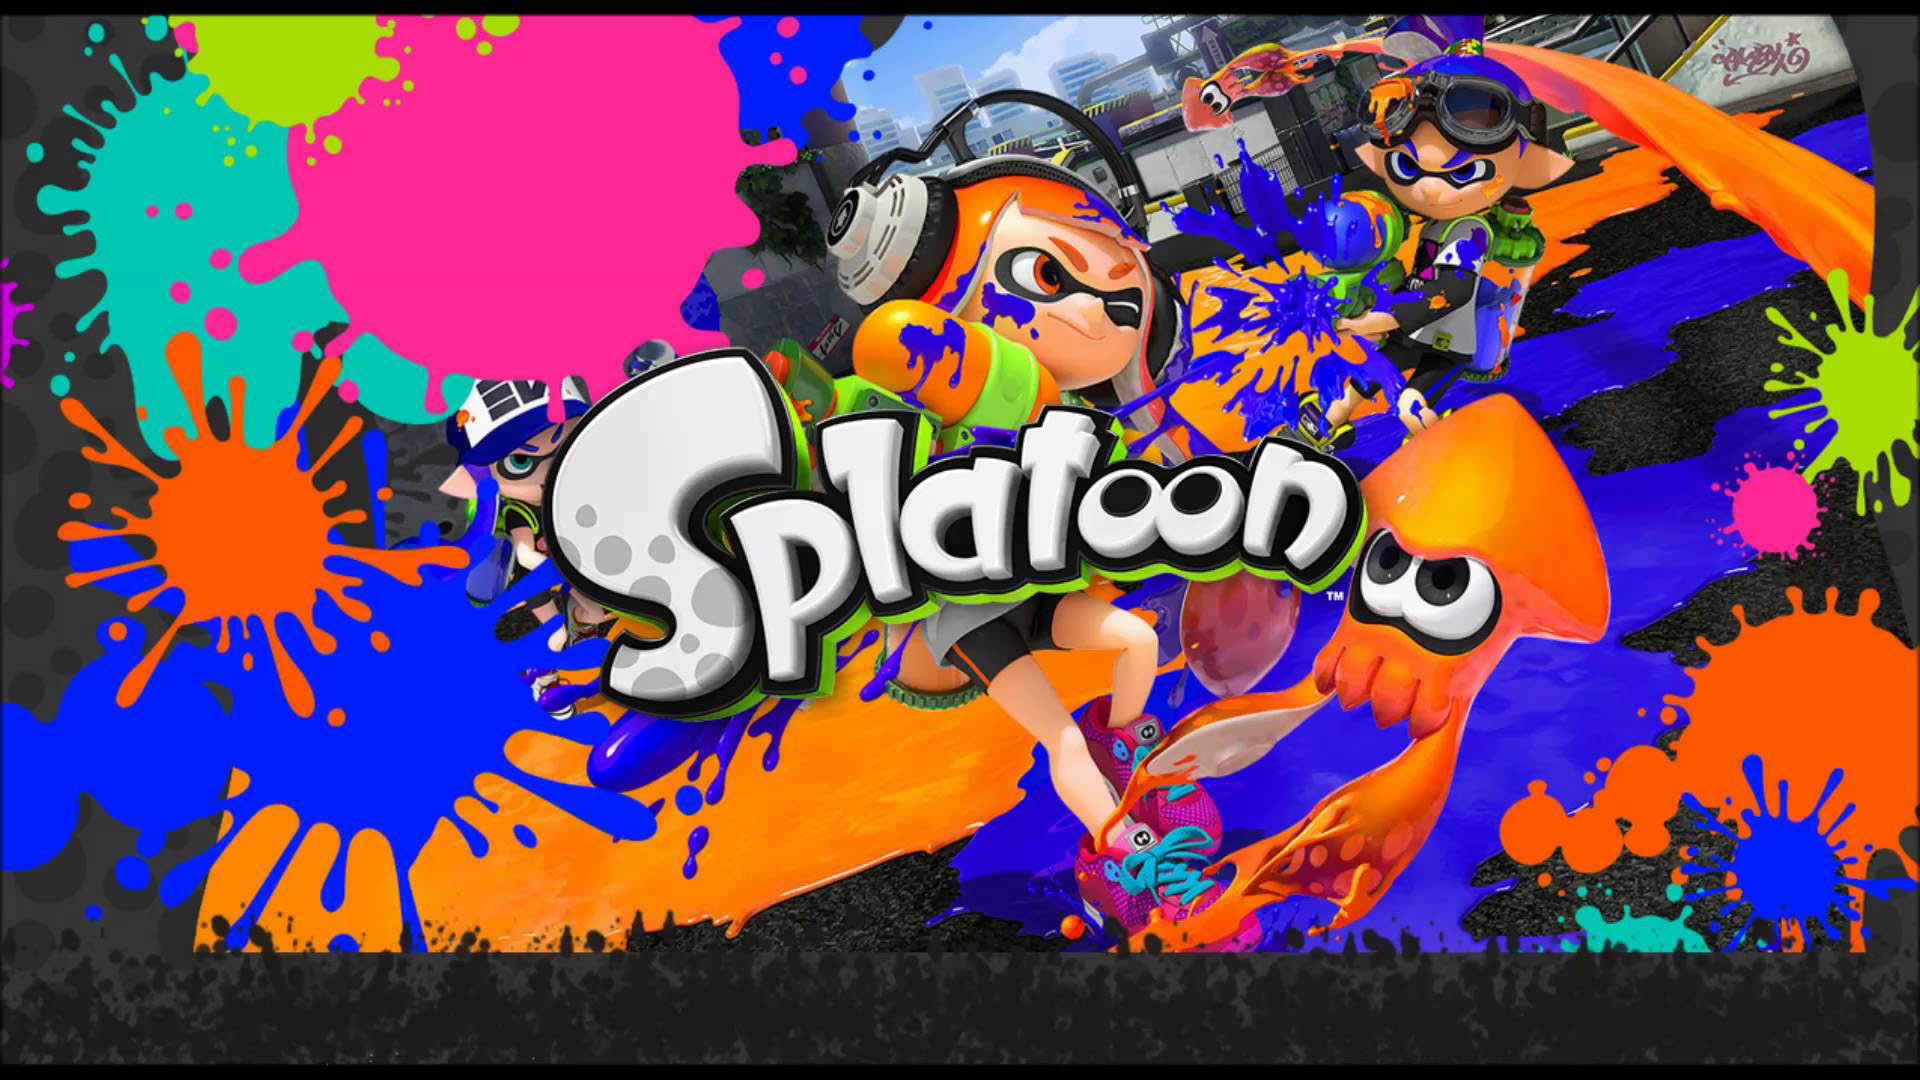 Splatoon Colored Nintendo Wii U Game wallpaper